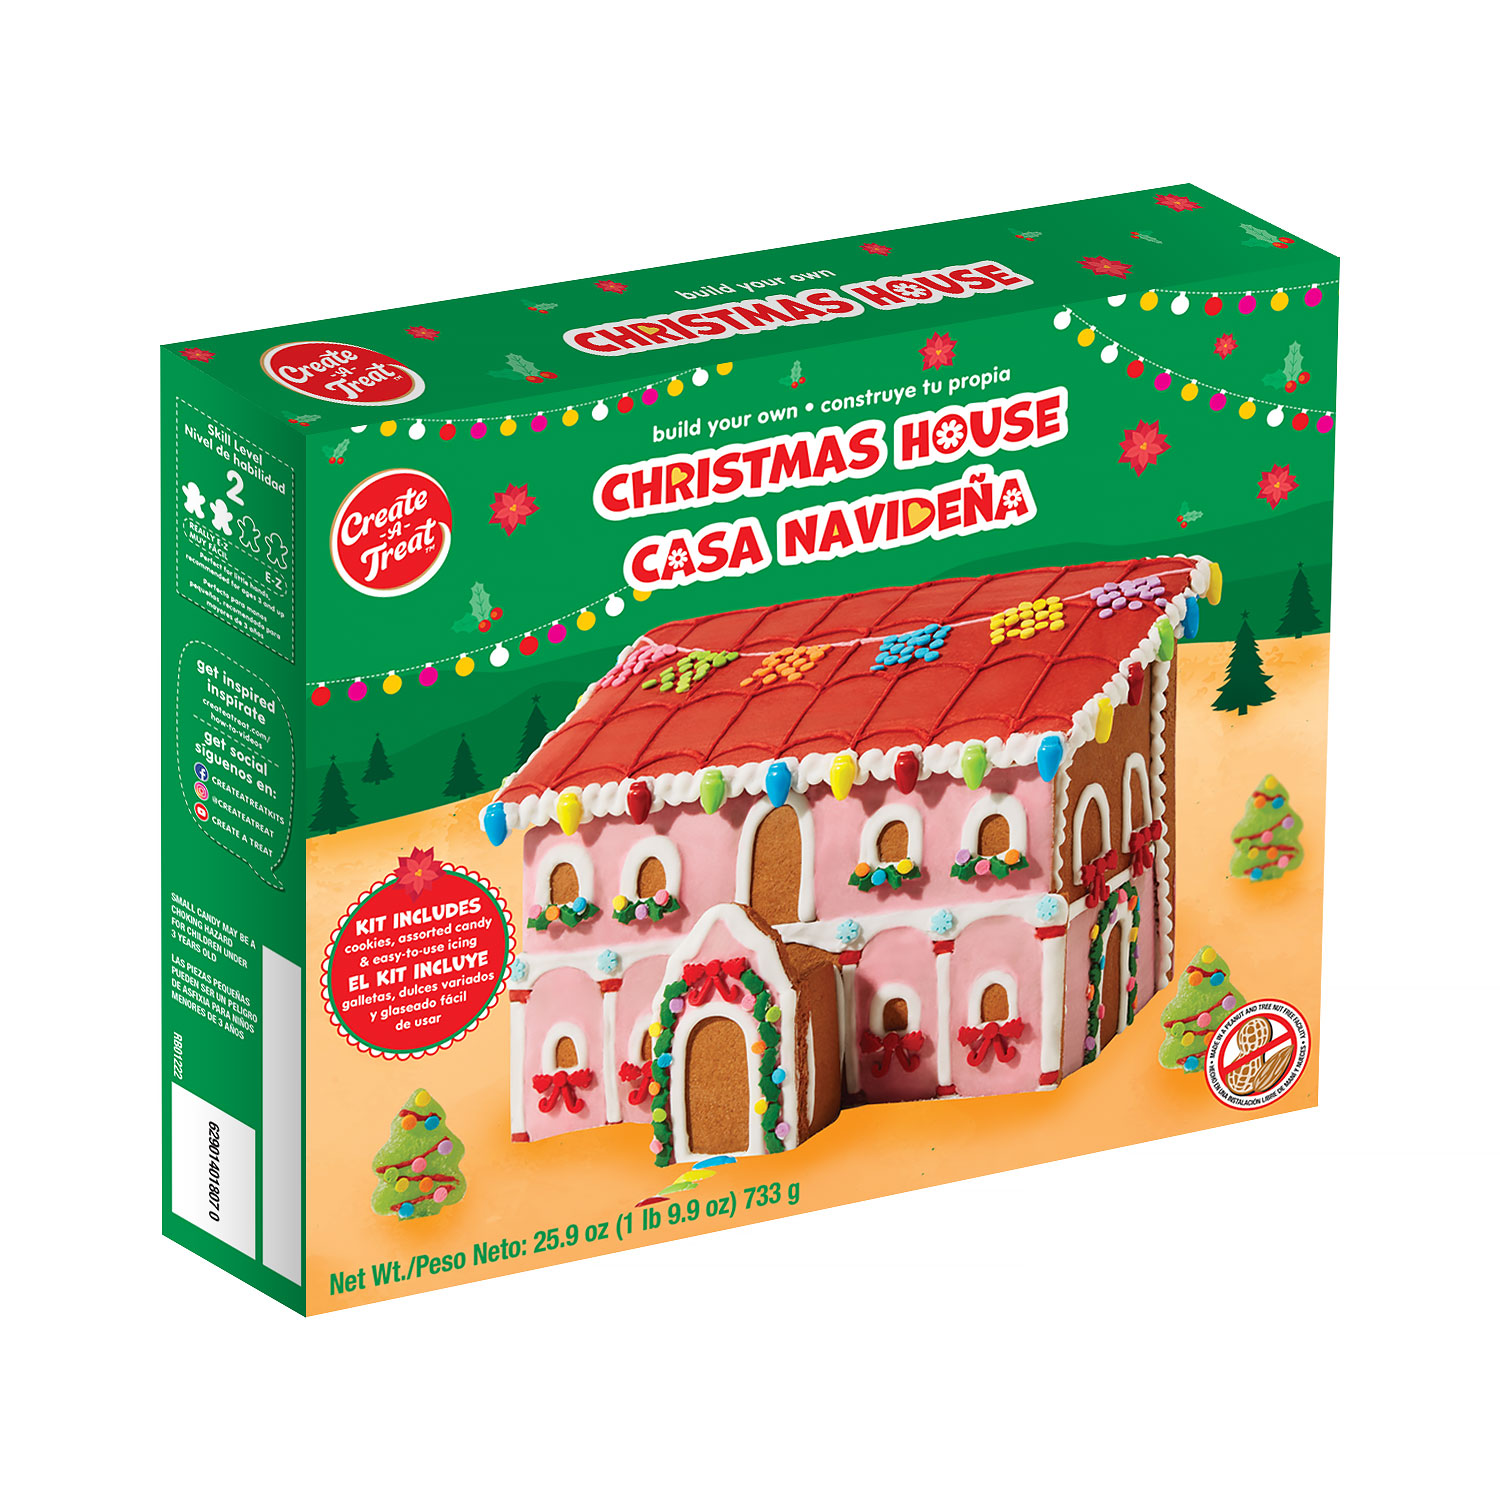 Christmas Gingerbread House / Casa Navidena